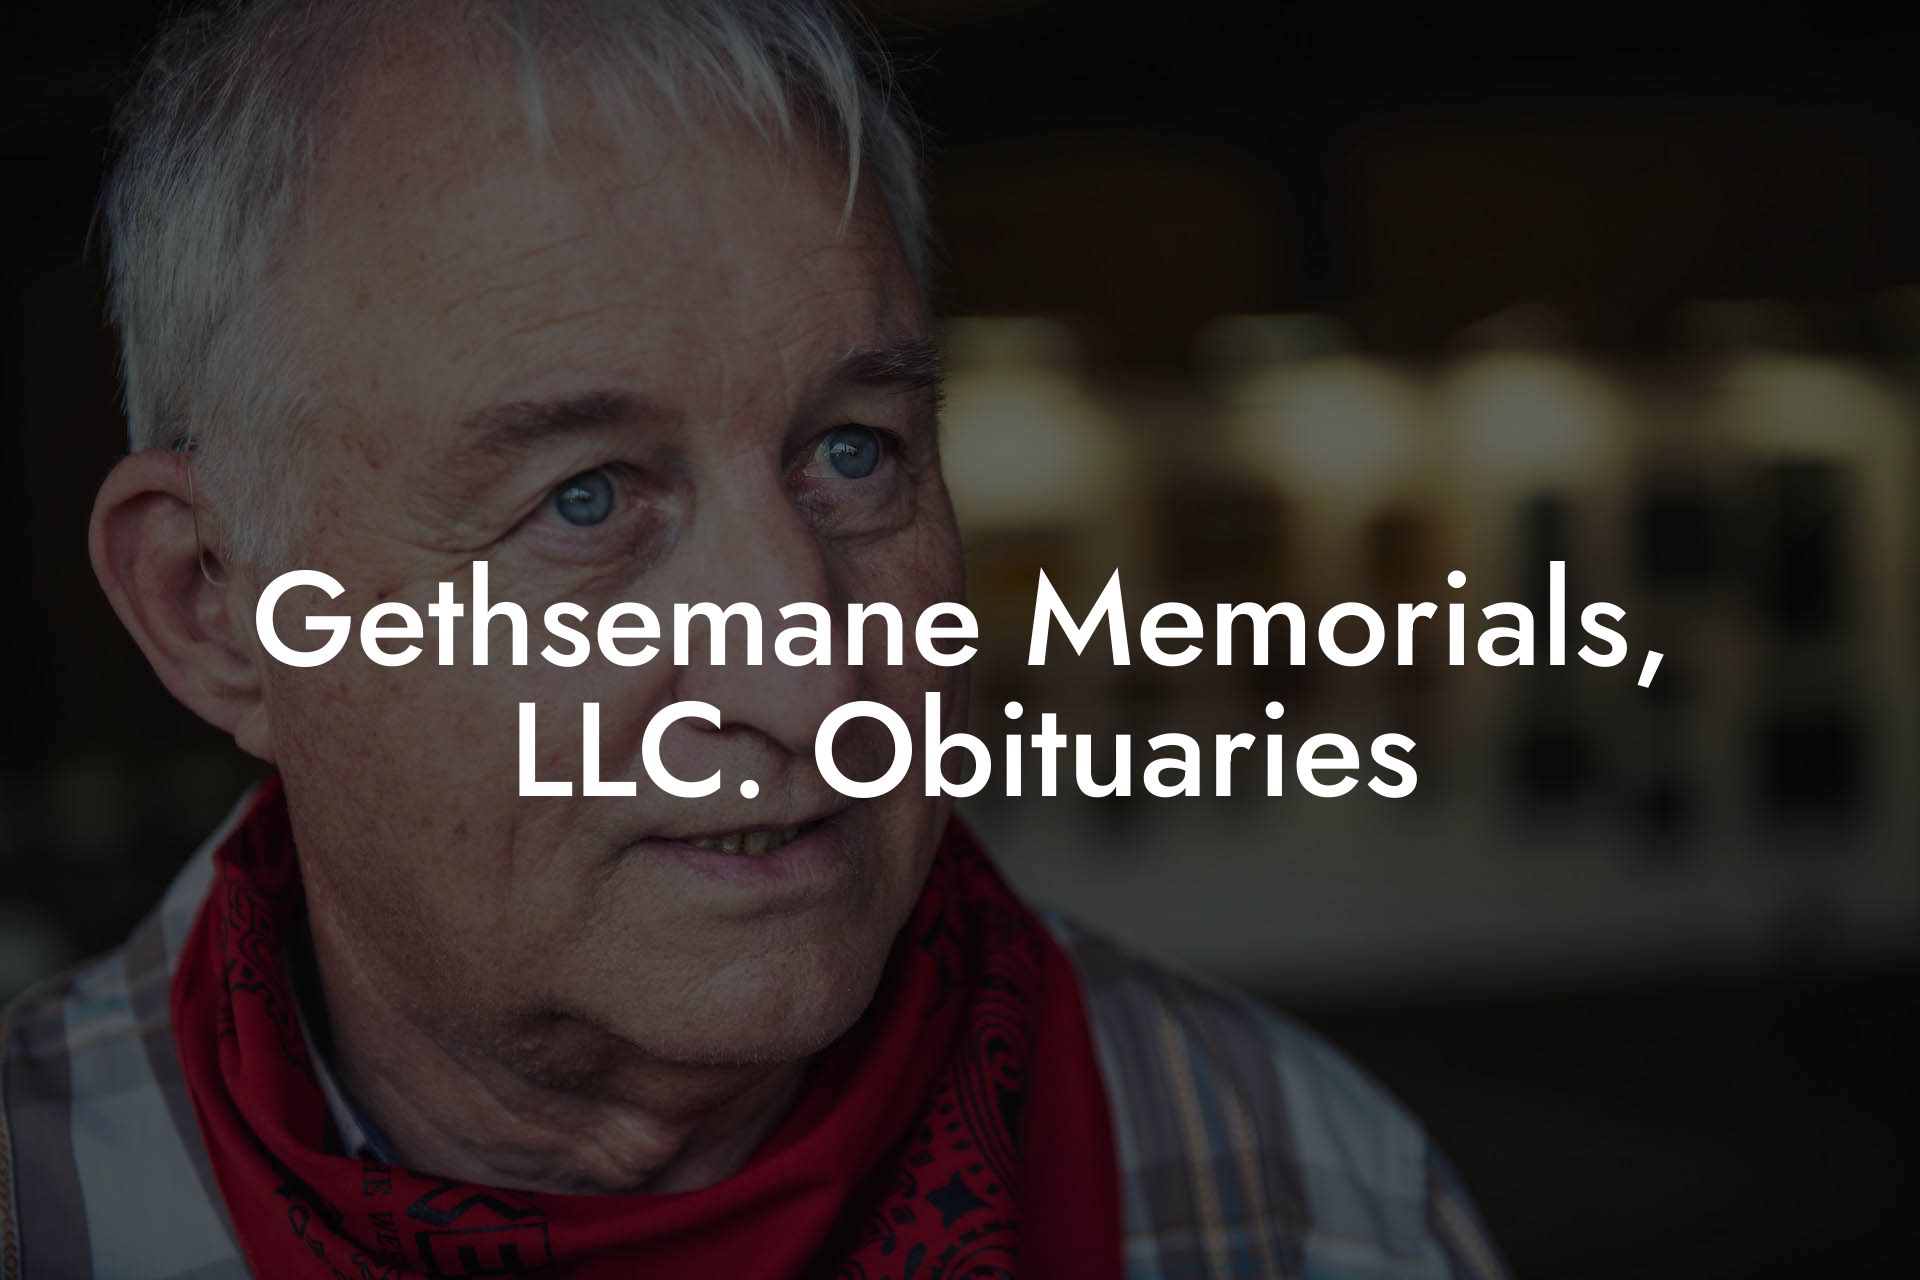 Gethsemane Memorials, LLC. Obituaries